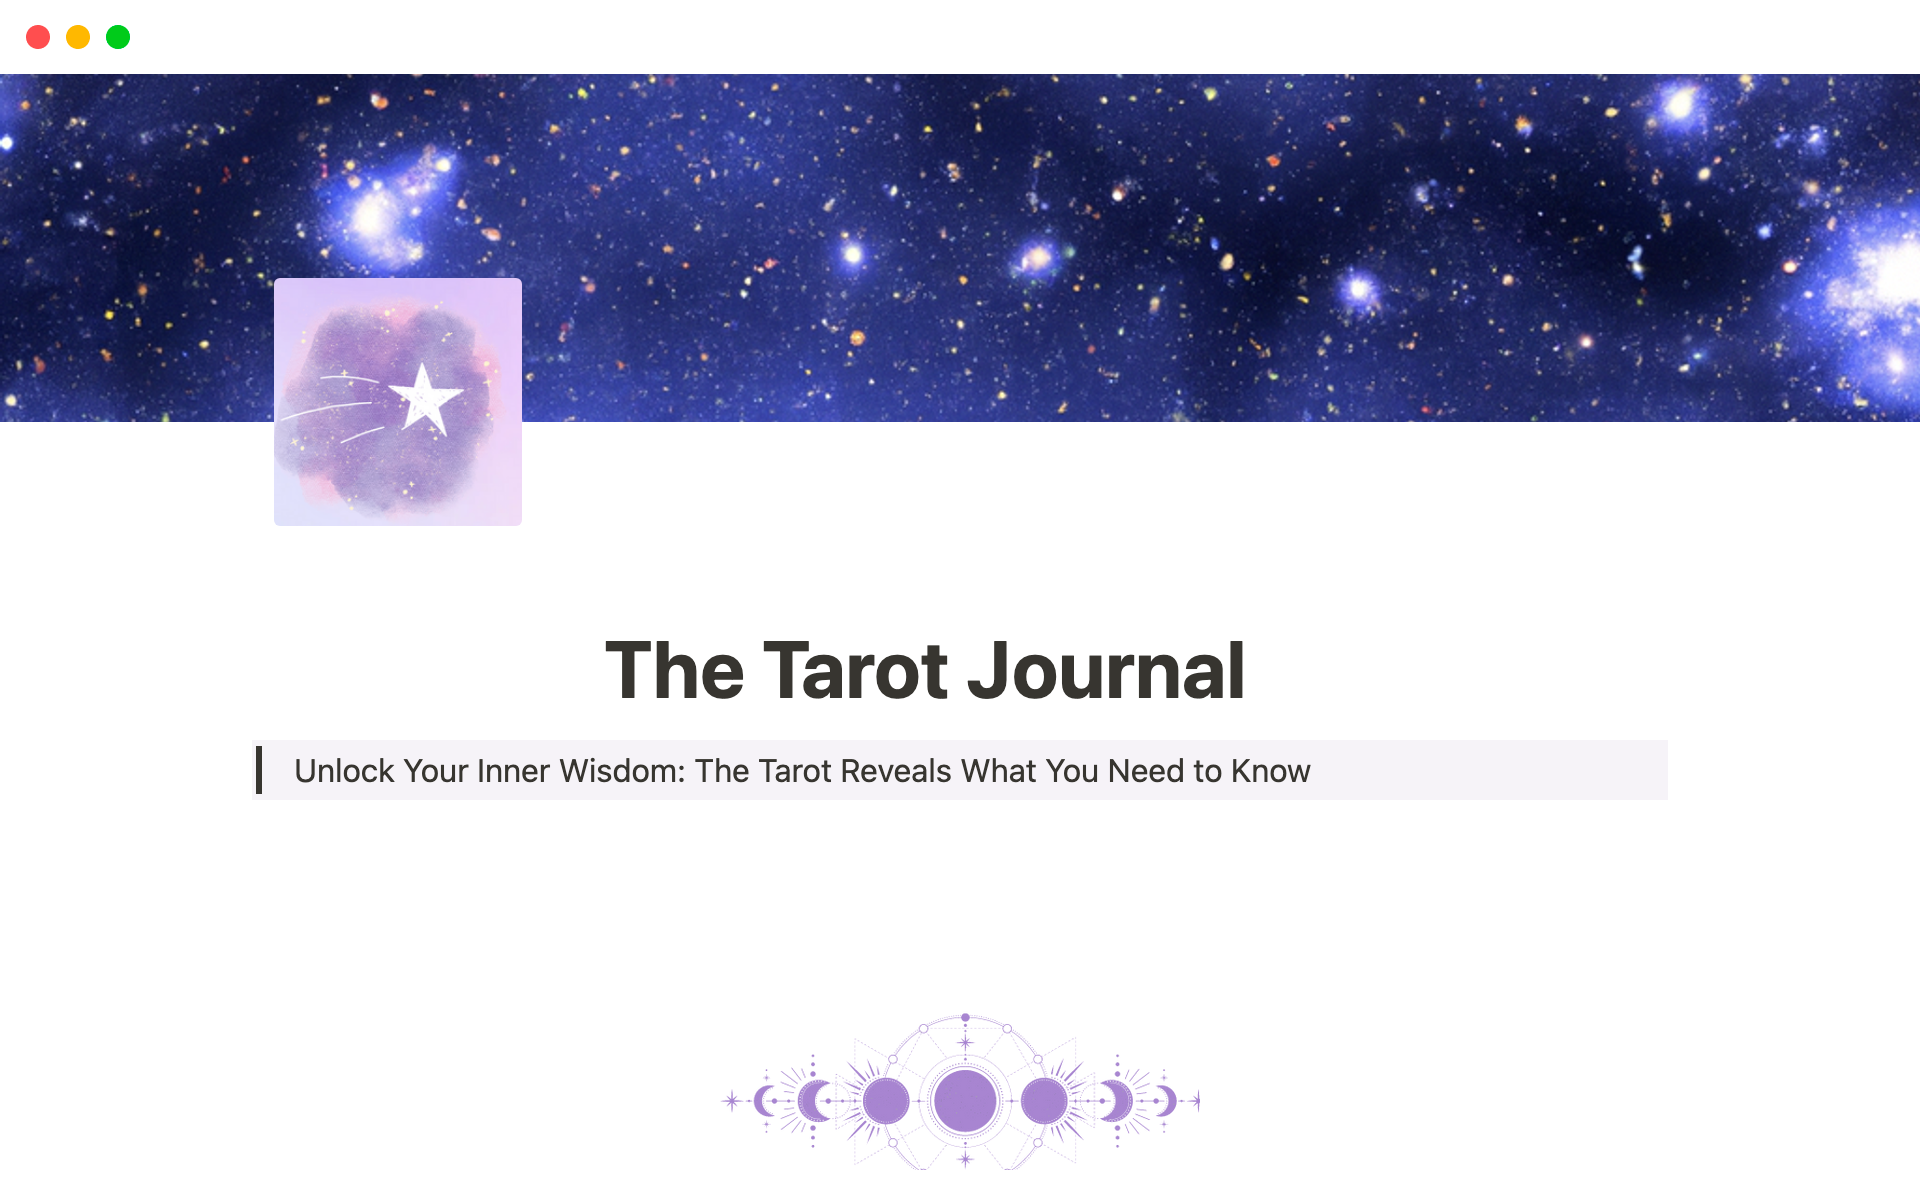 Document the Tarot journey